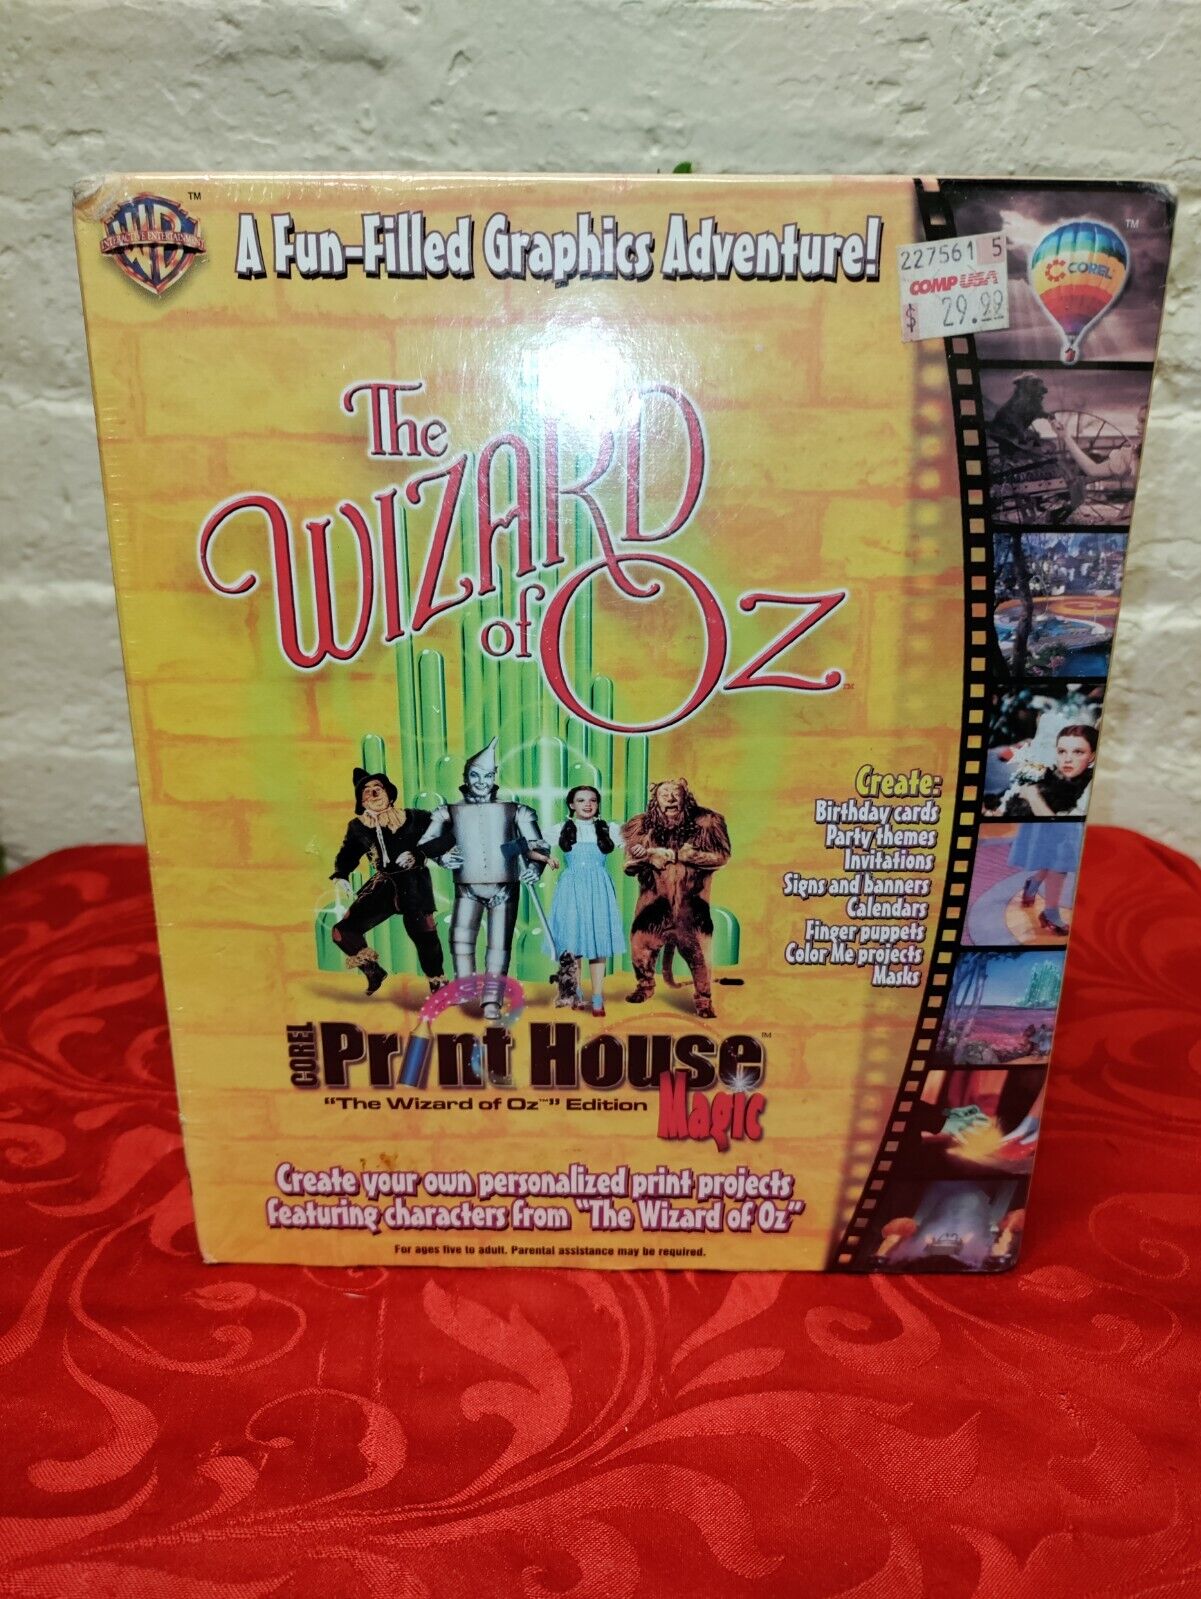 COREL PRINT HOUSE MAGIC THE WIZARD OF OZ EDITION -WINDOWS 95 PC, CD-ROM BIG BOX 